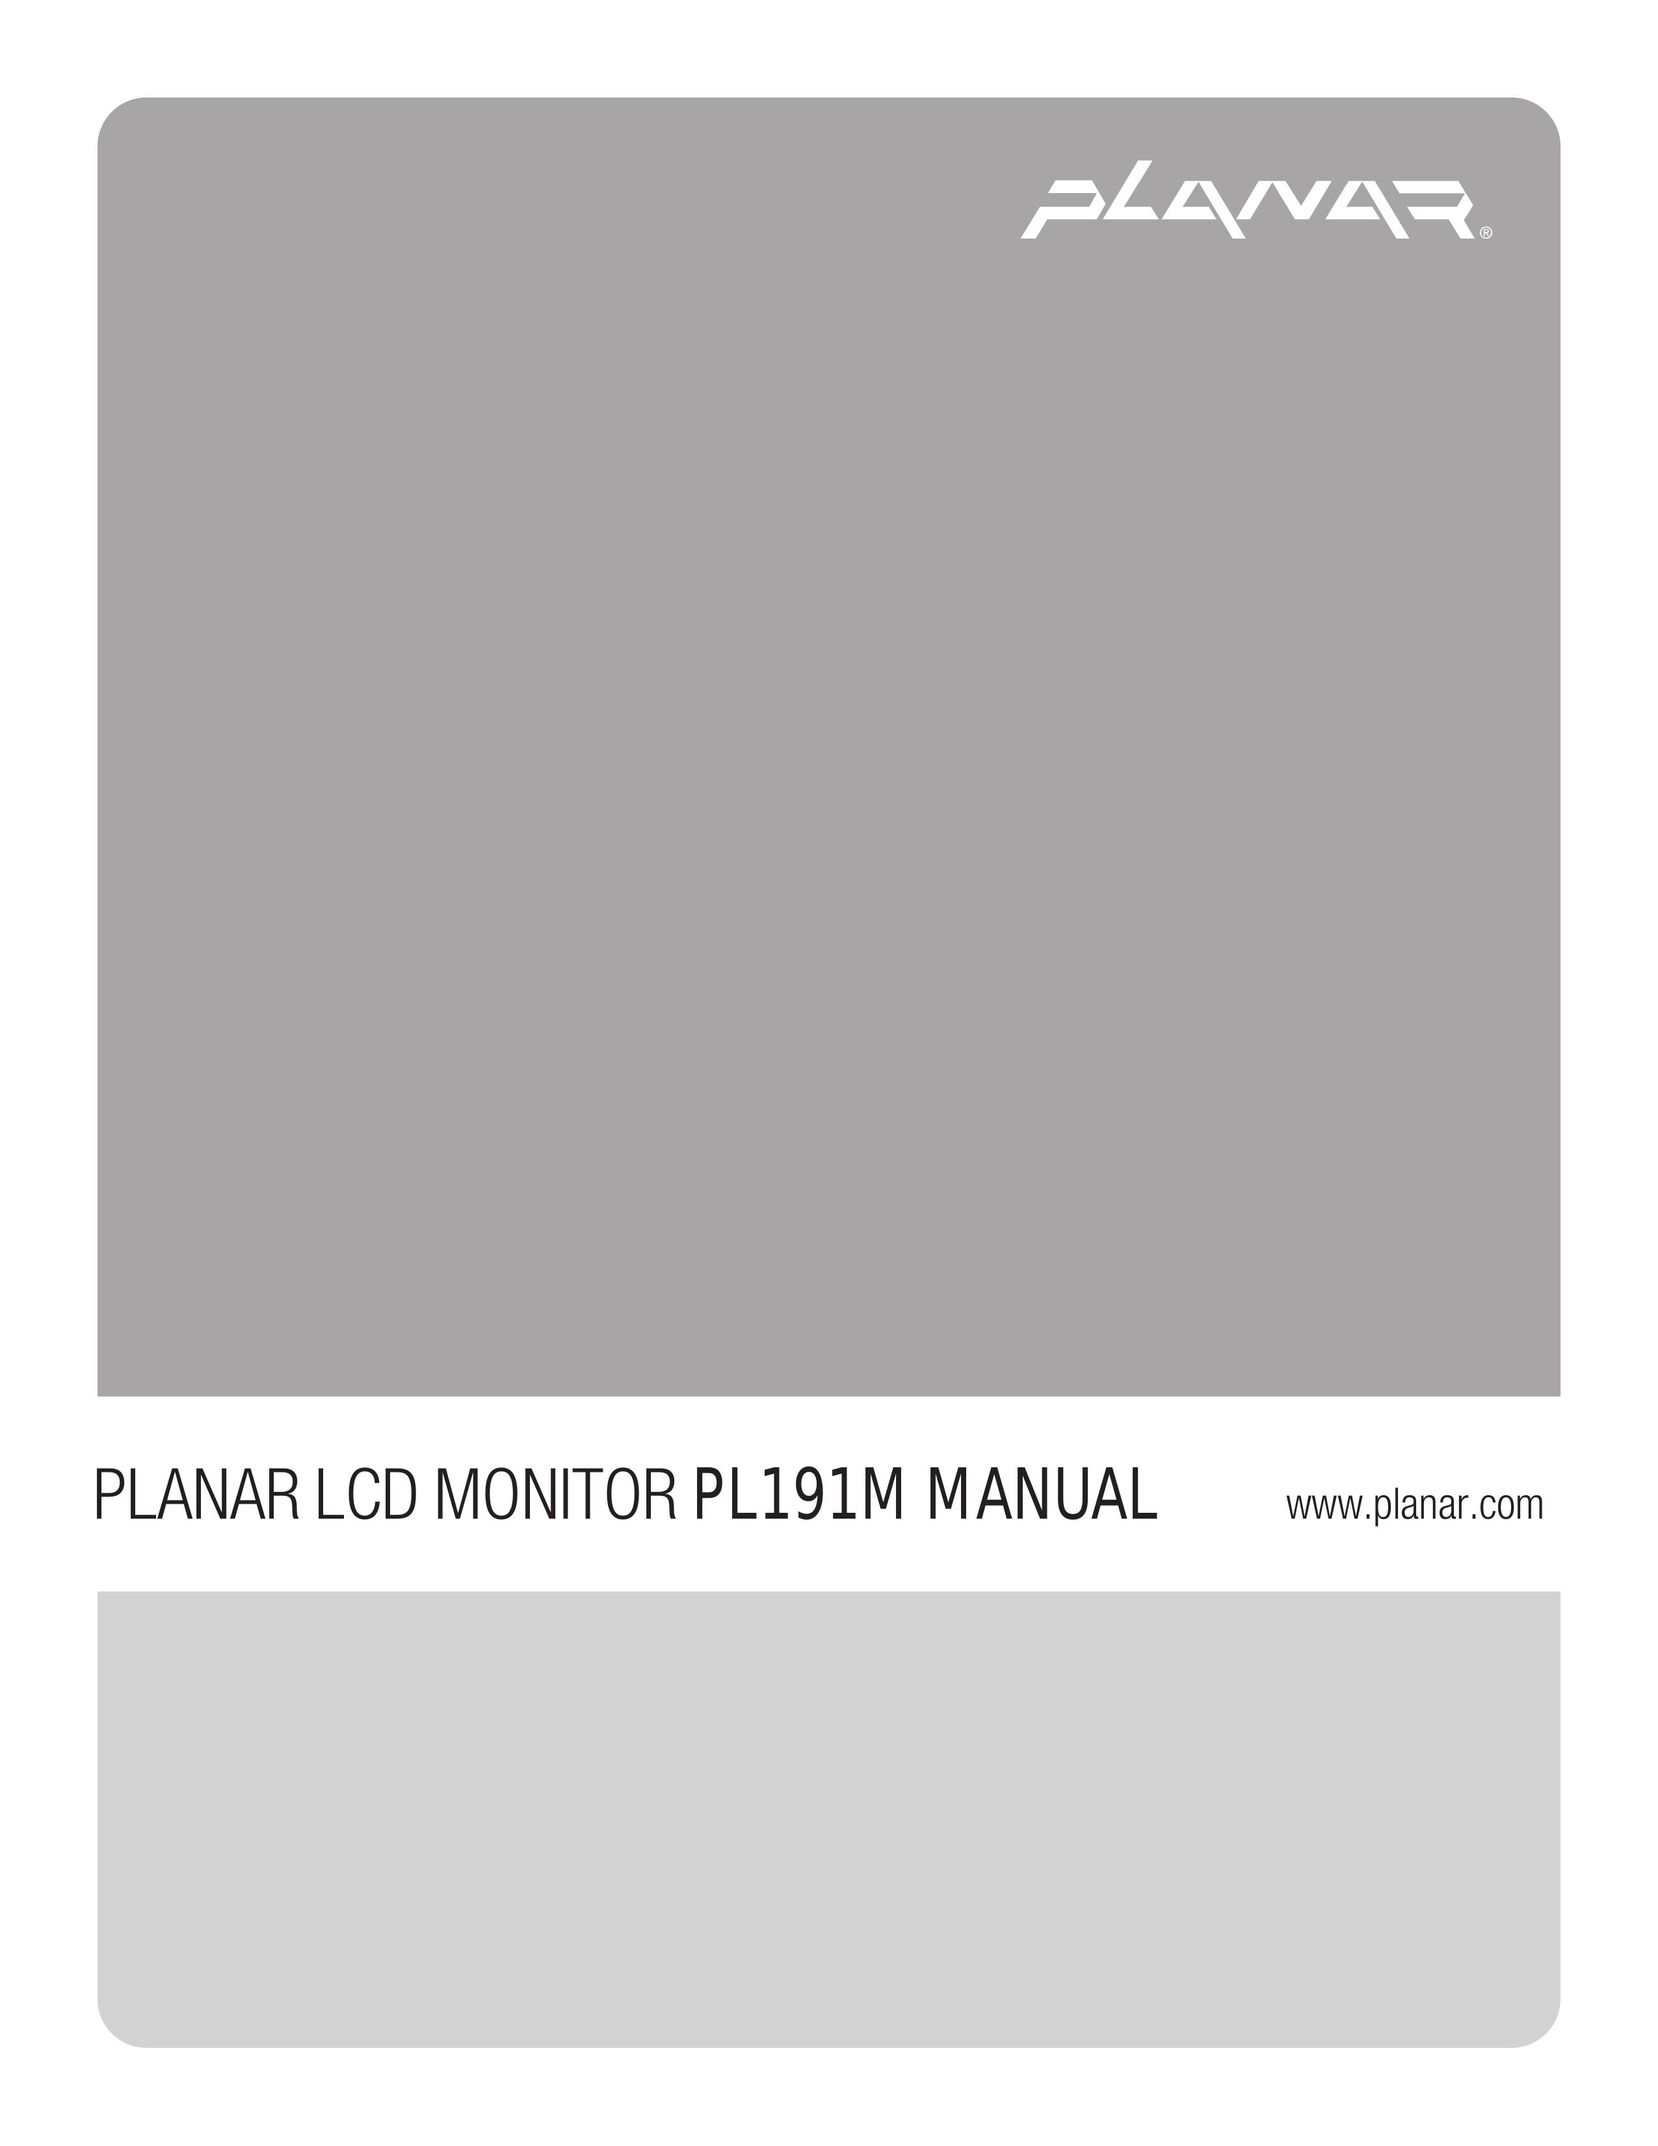 Planar pl191m Car Video System User Manual